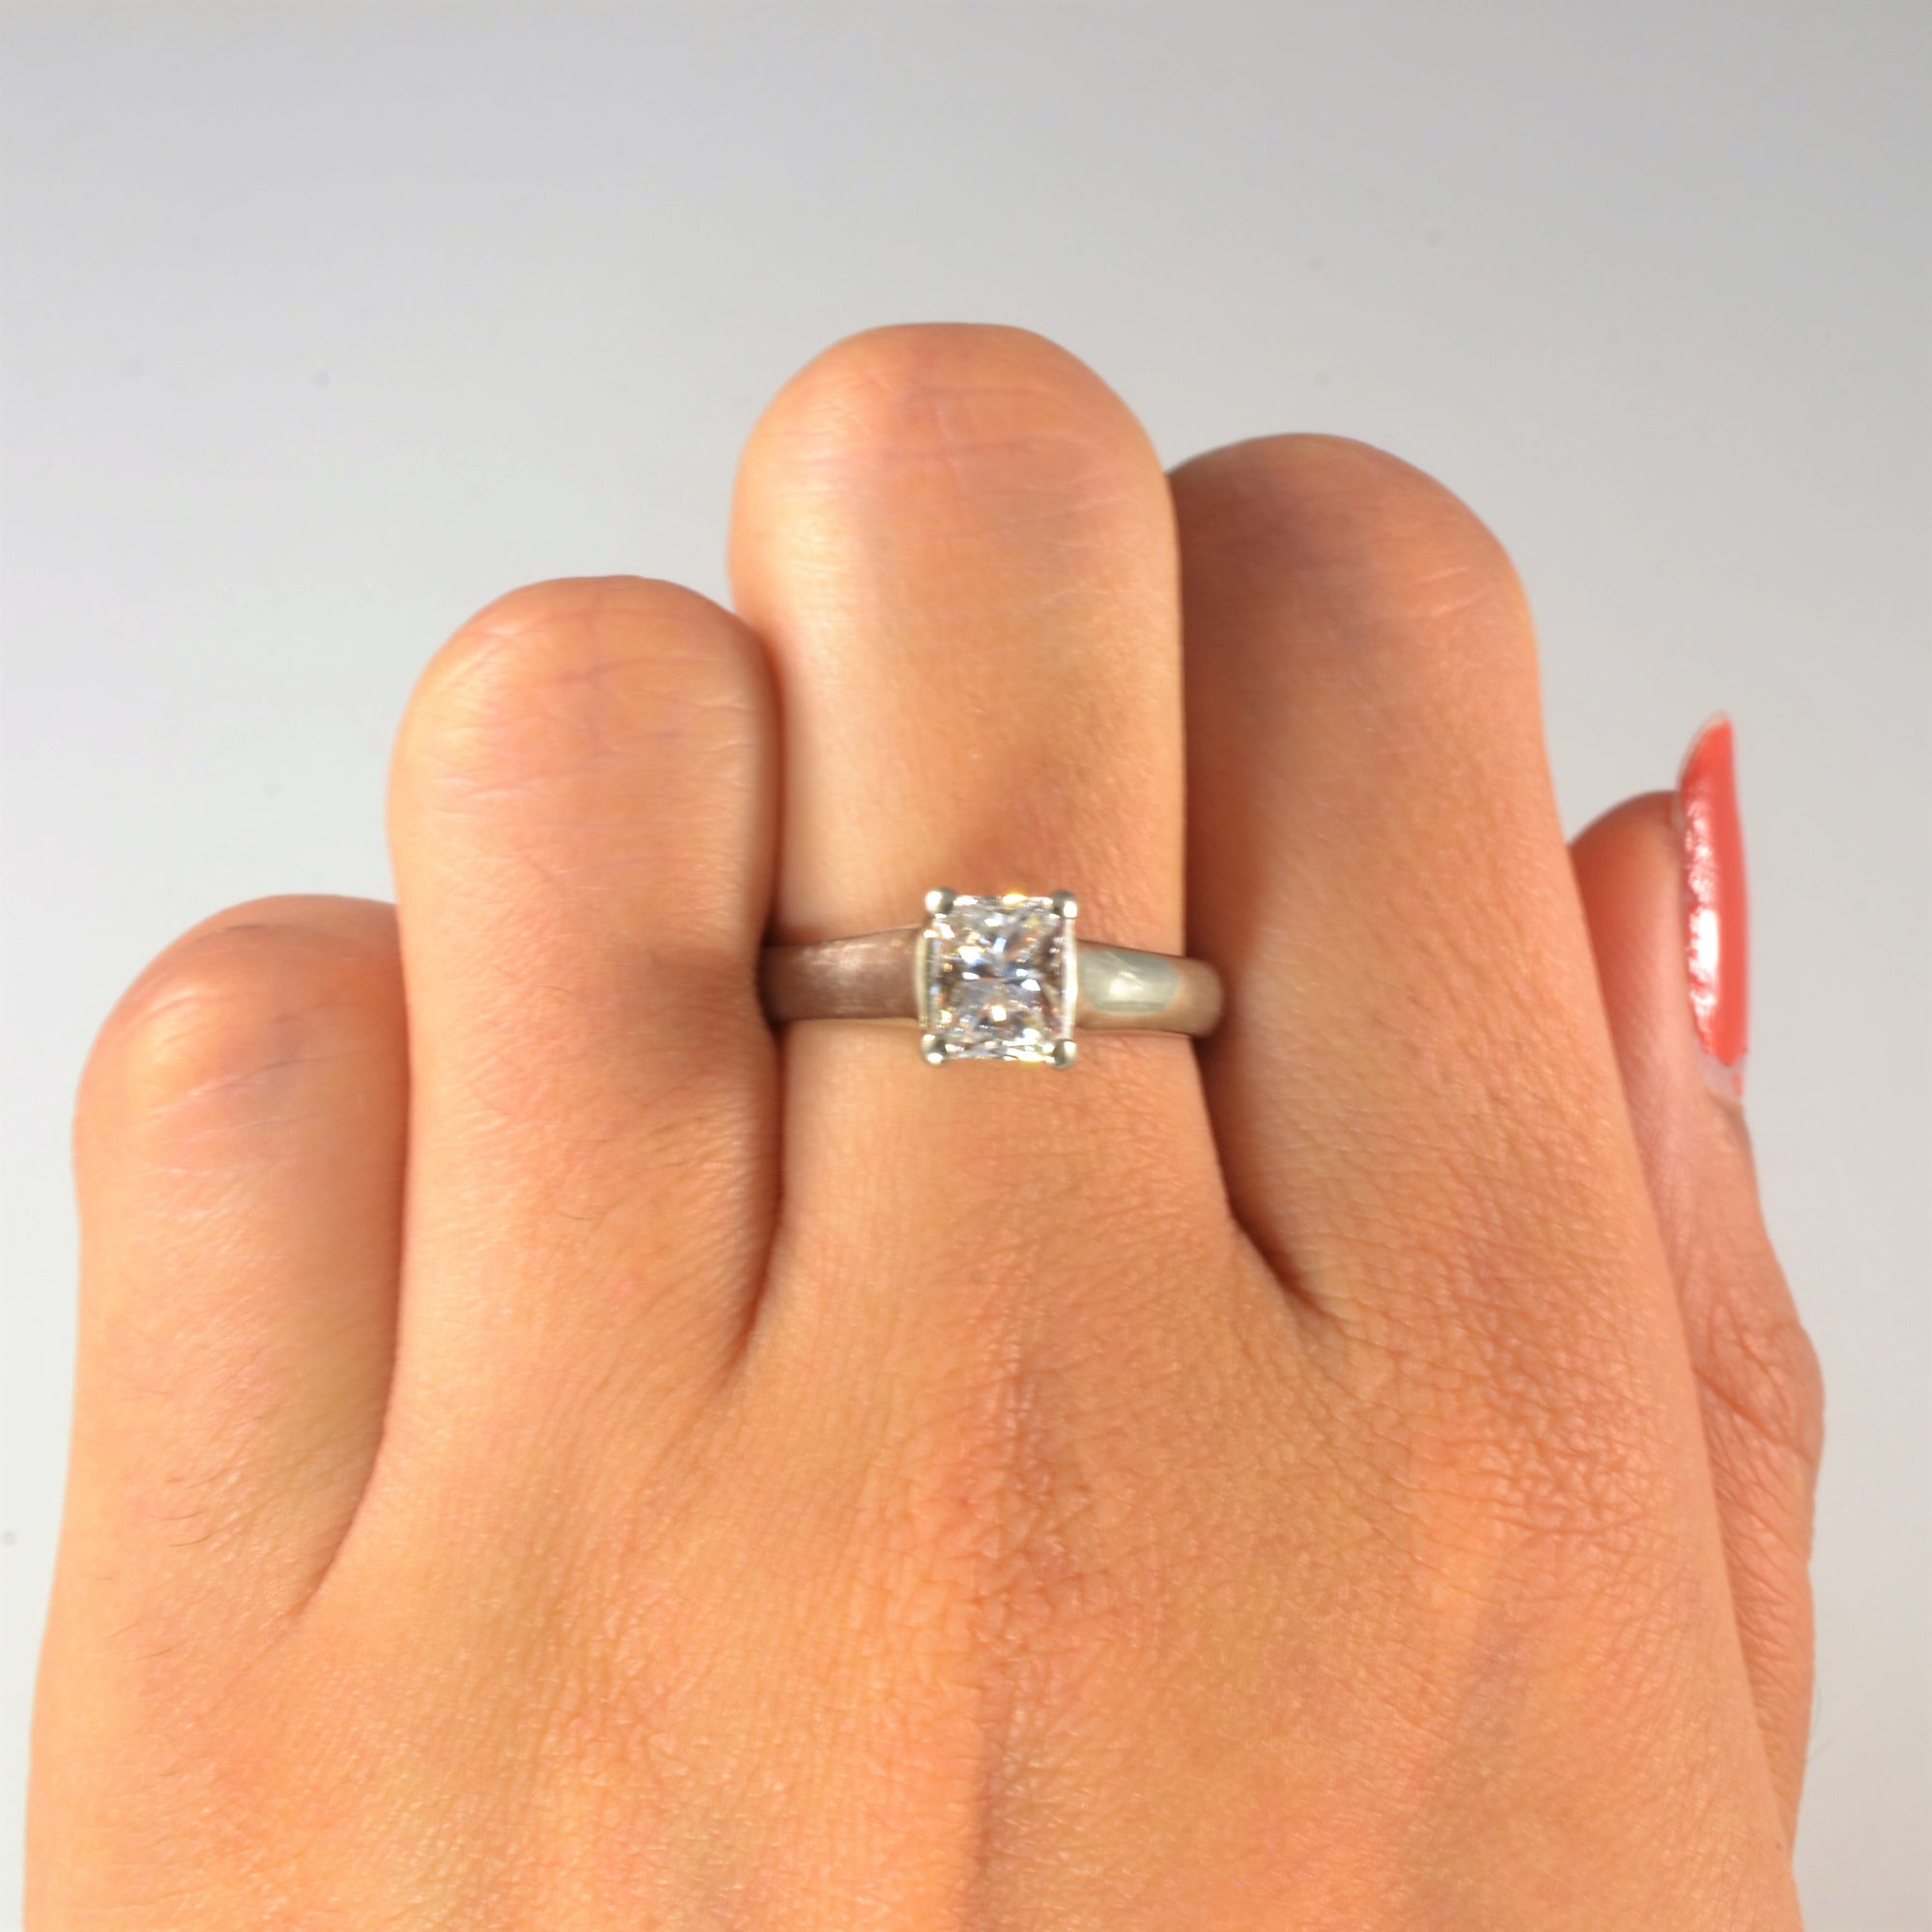 Radiant Cut Solitaire Diamond Engagement Ring | 1.04ct | SZ 6.5 |